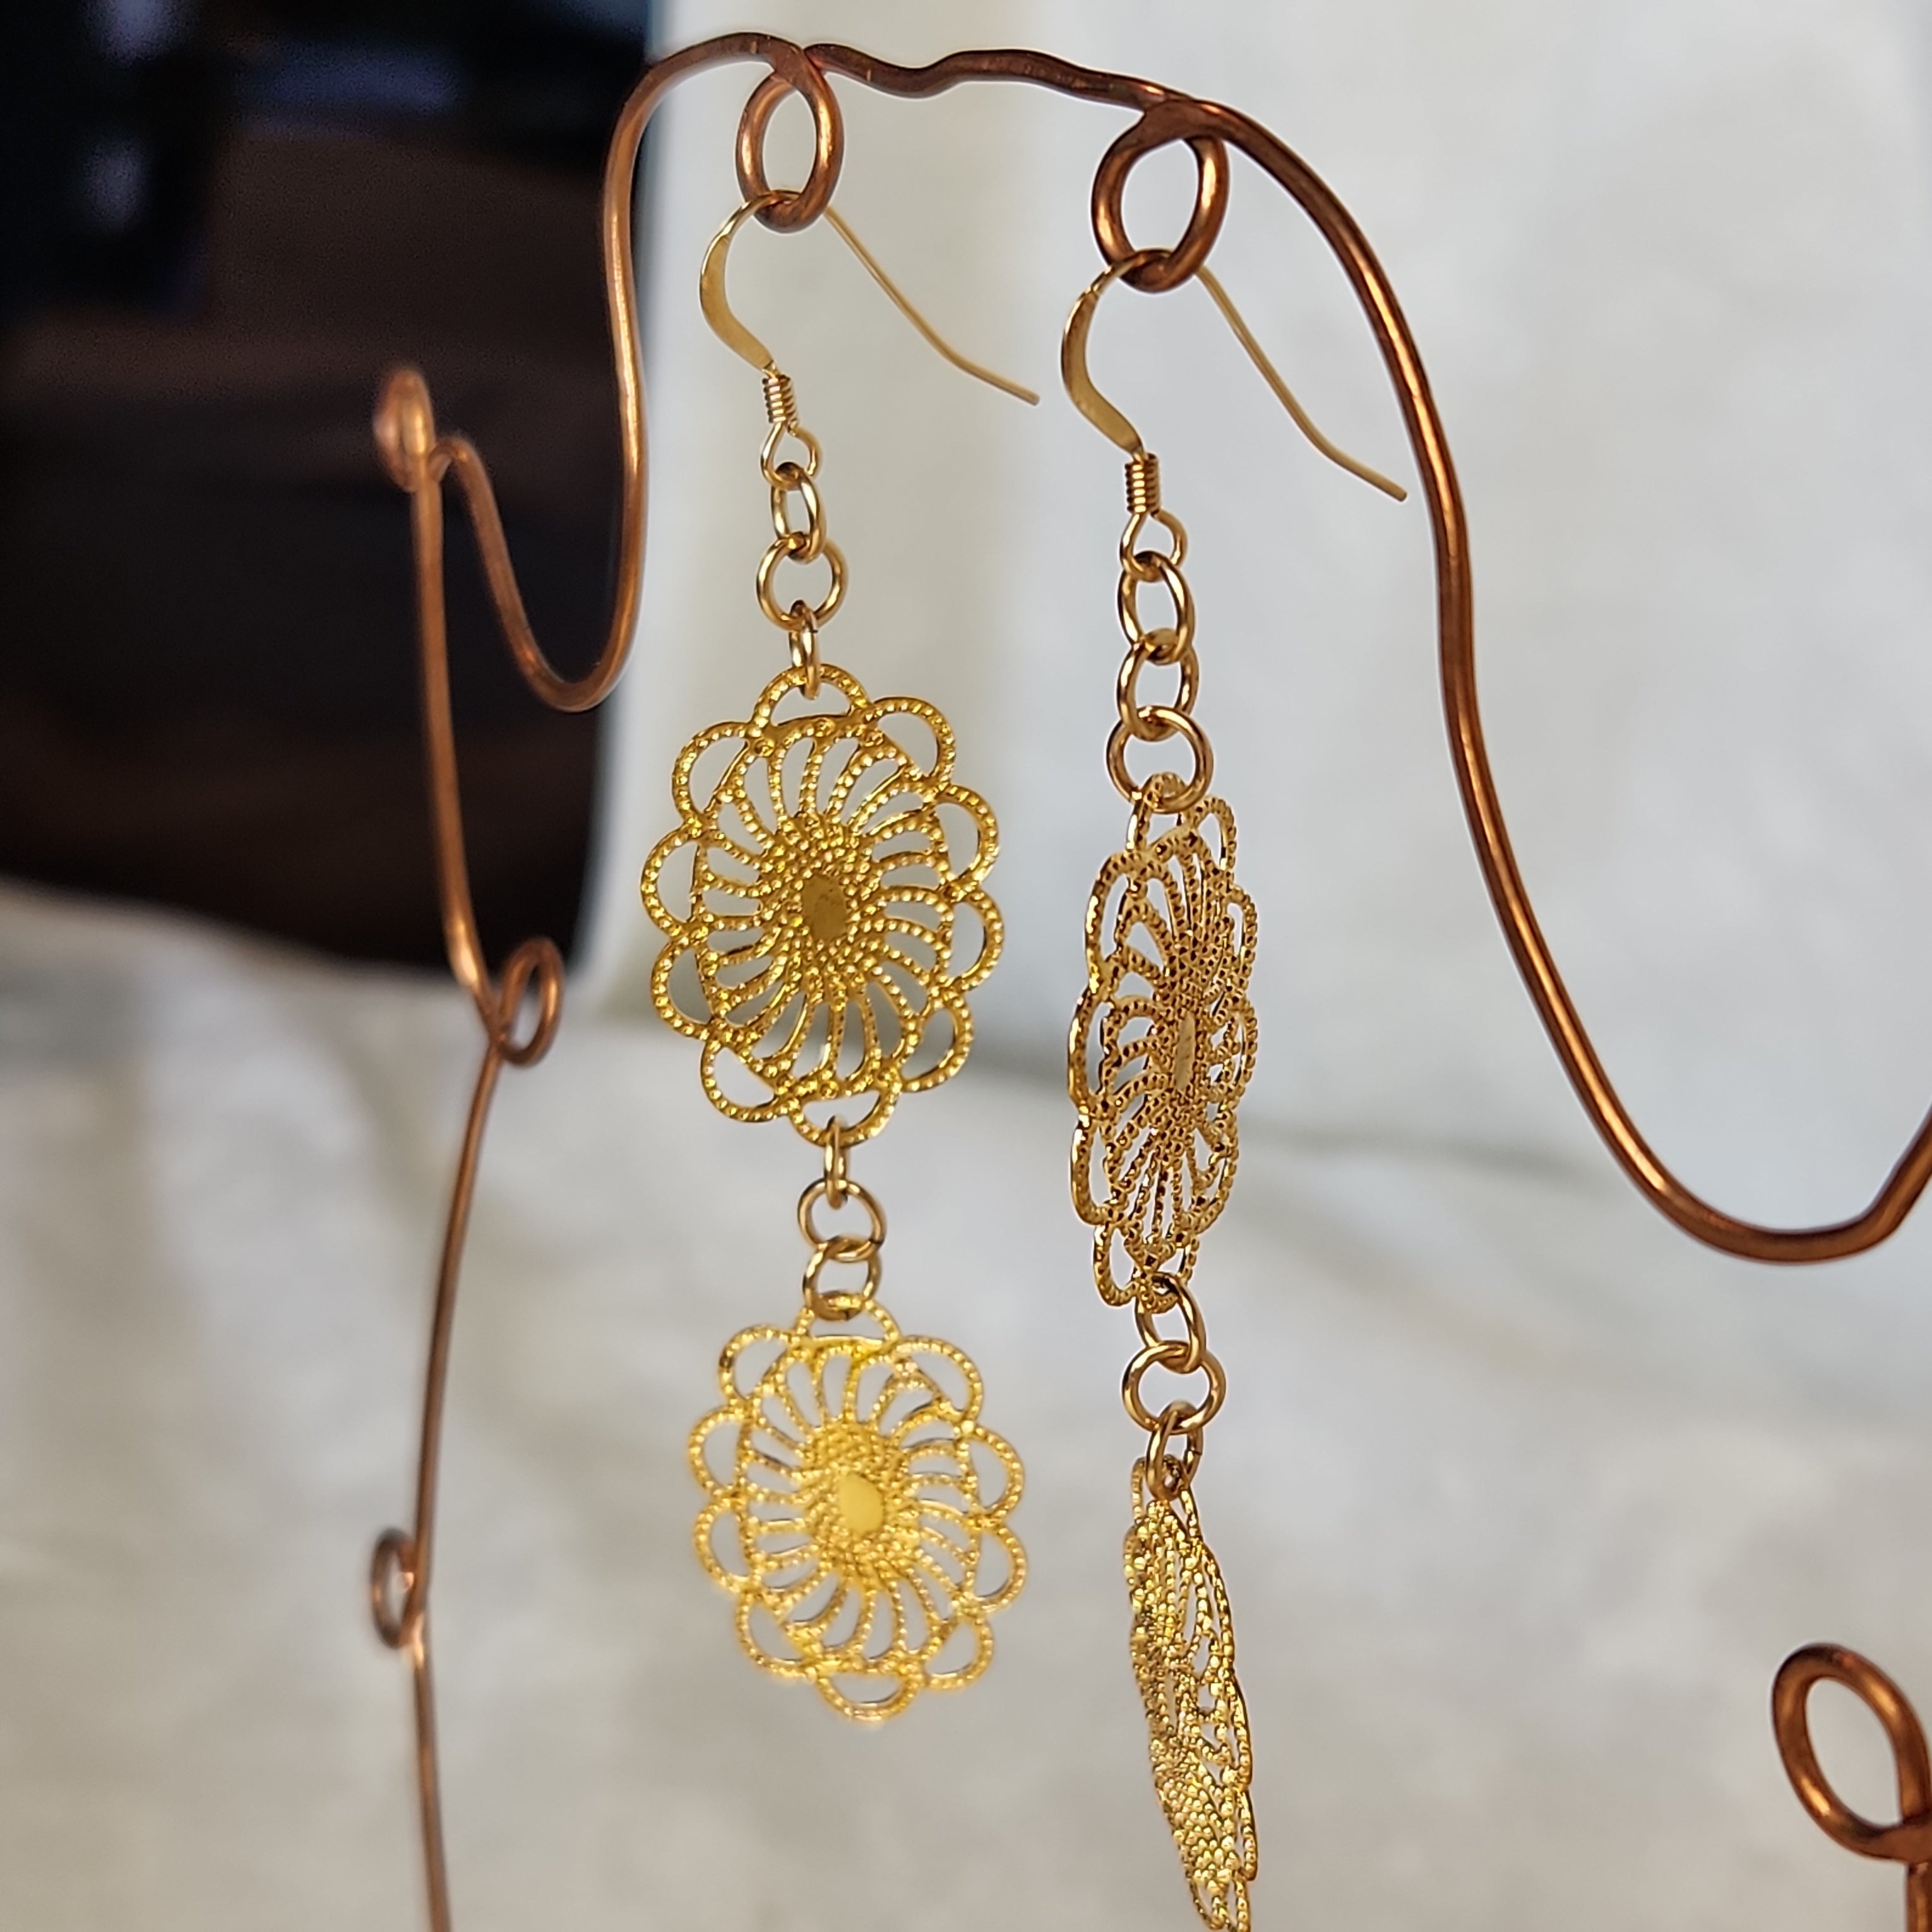 Michael Kors Fashion Rose Gold Brass Bracelet and Earring Set